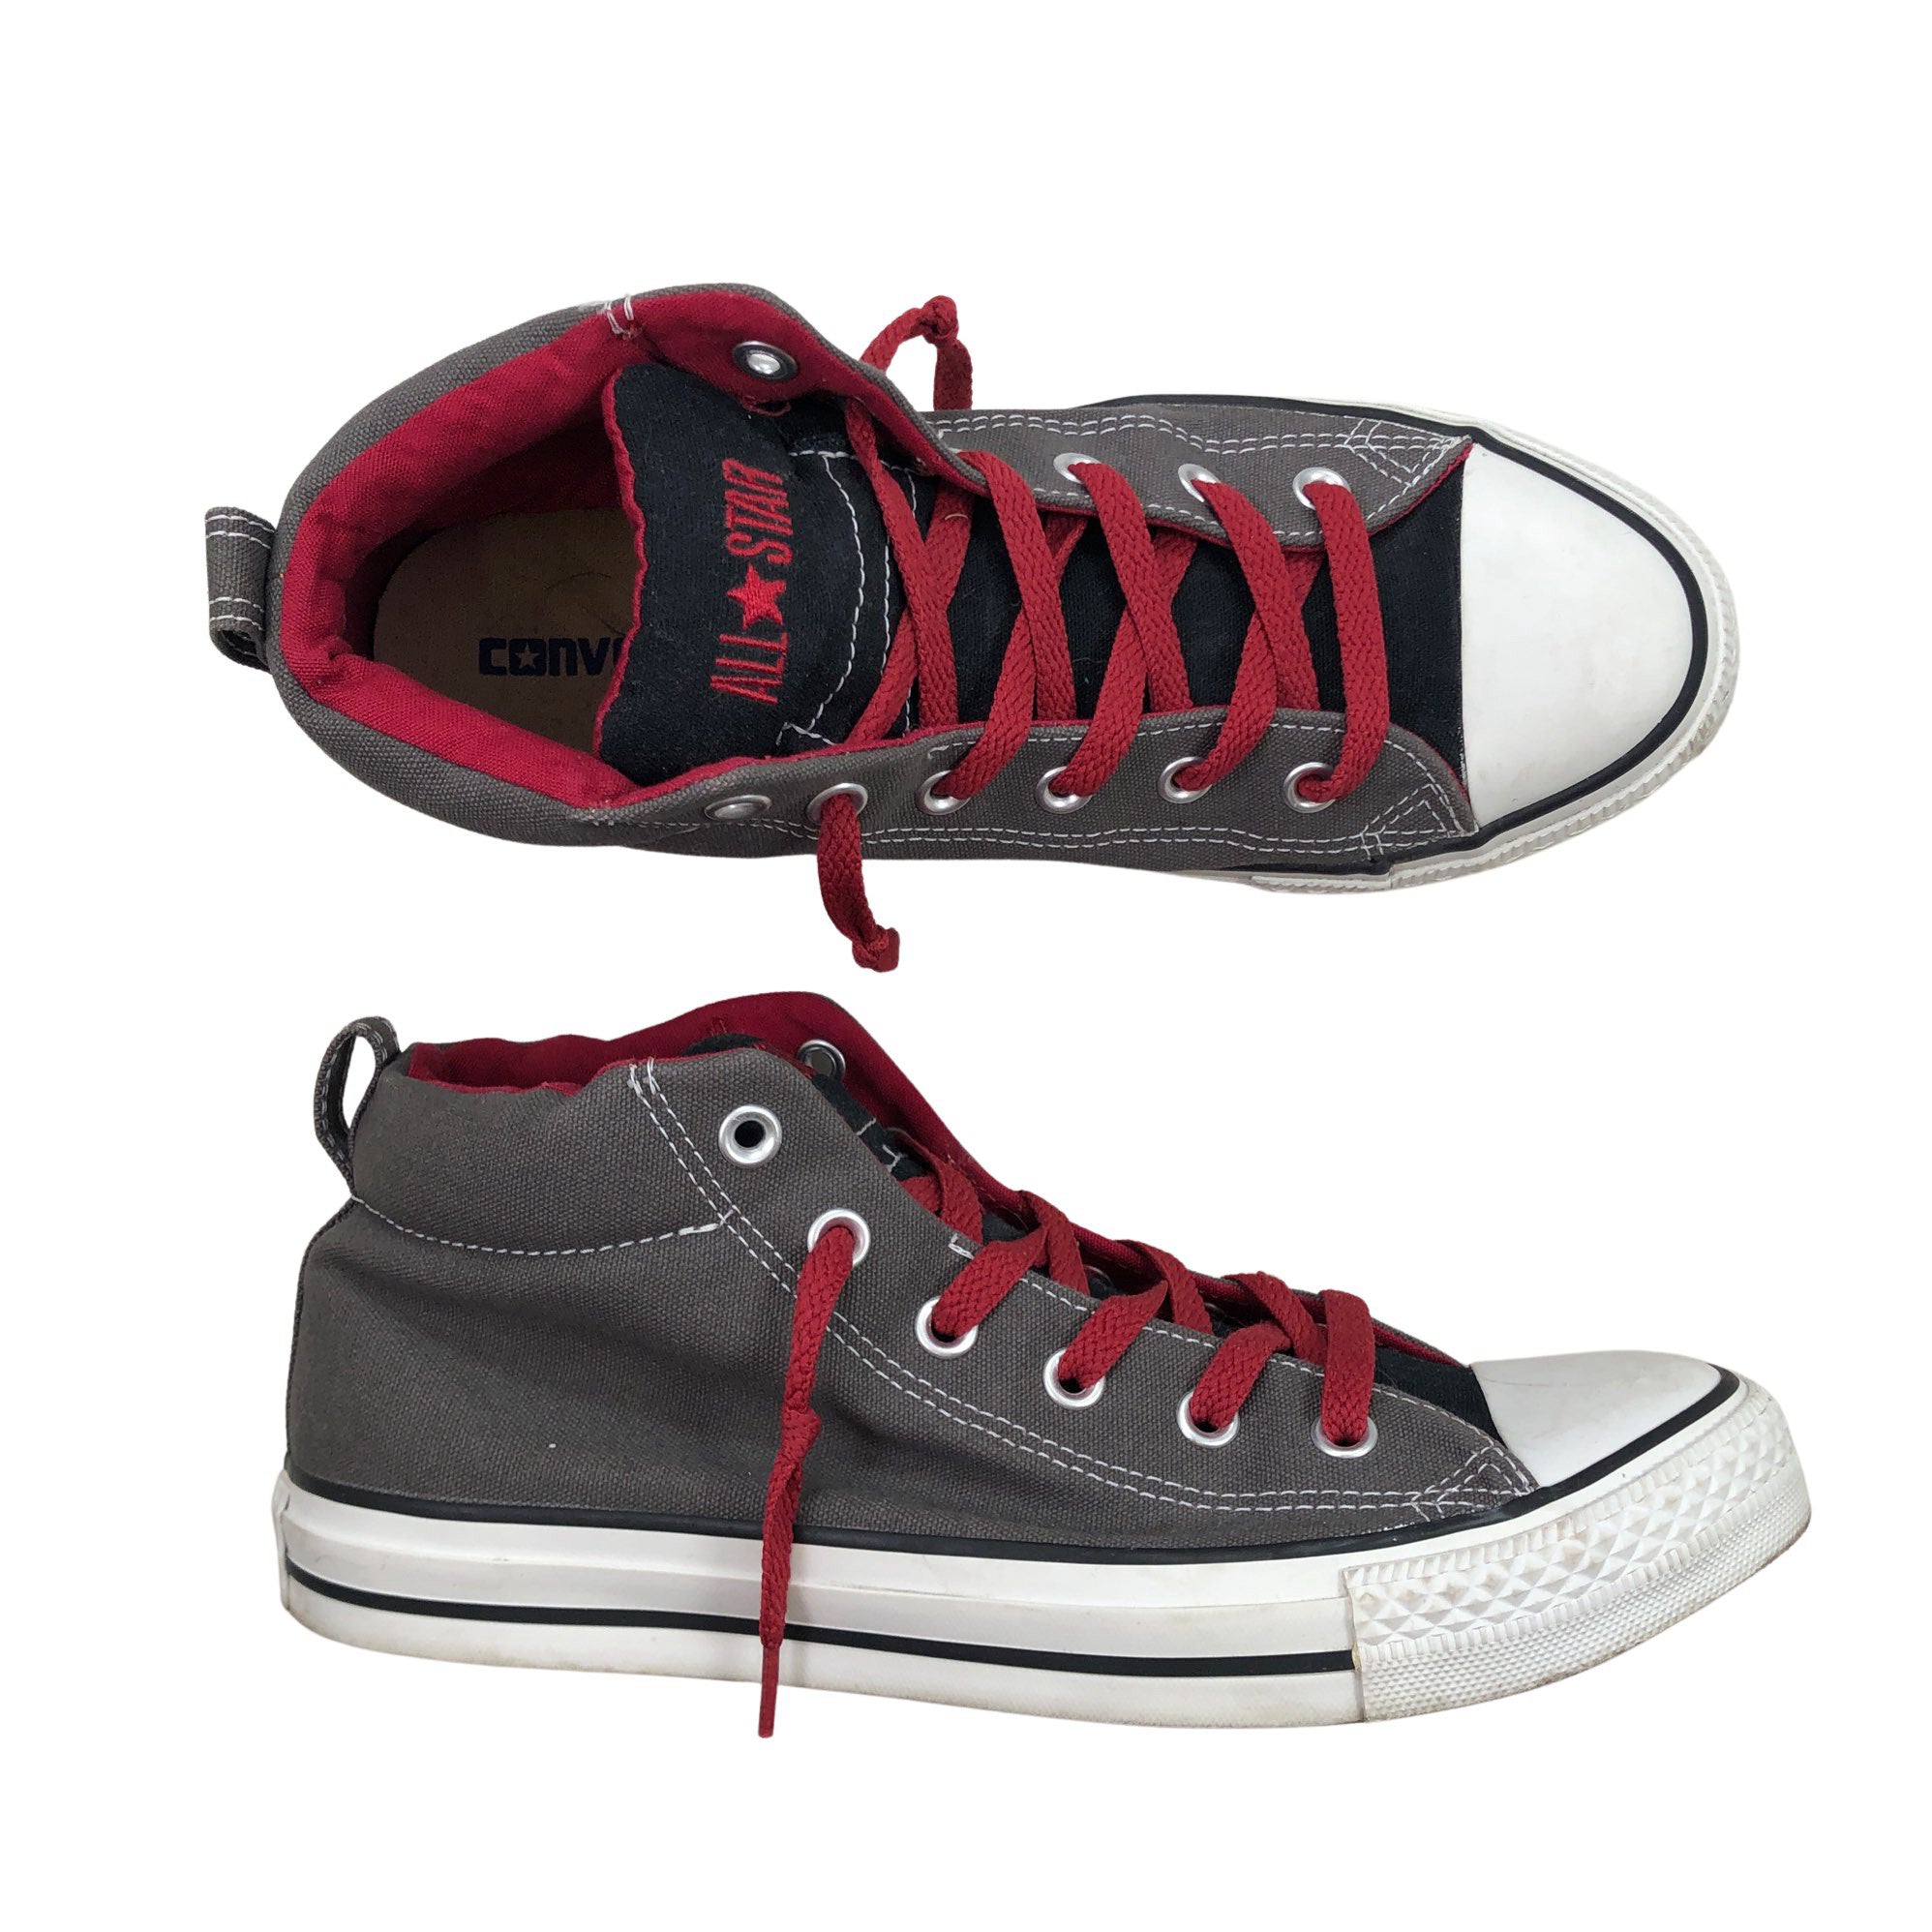 Grey Converse Shoes | tunersread.com